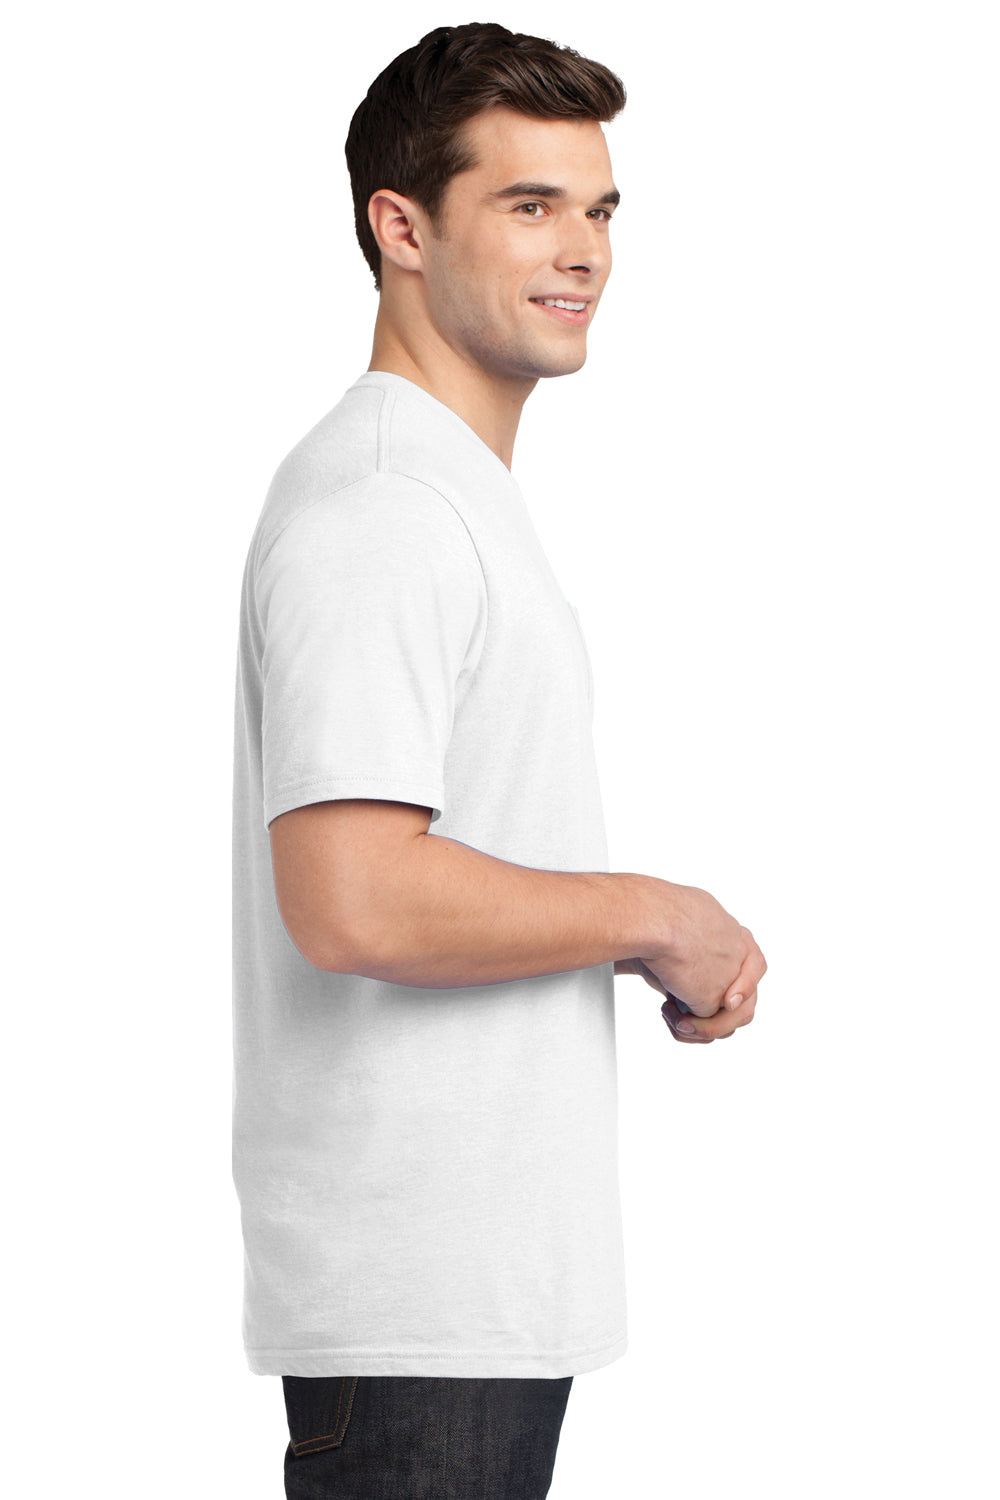 District DT6000P Mens Very Important Short Sleeve Crewneck T-Shirt w/ Pocket White Side